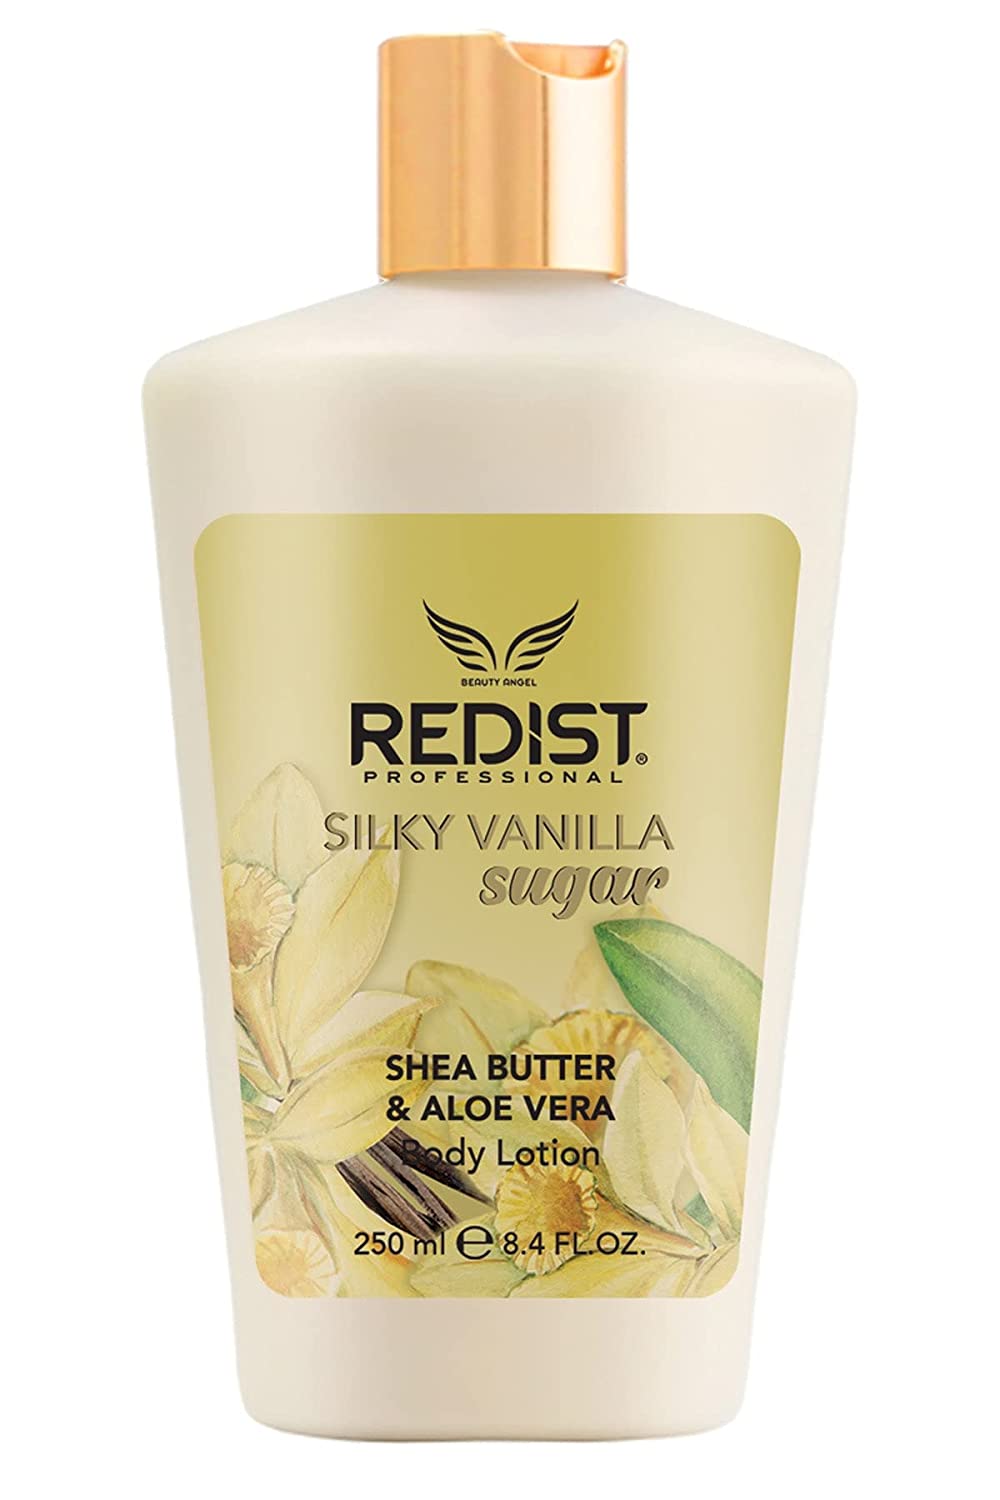 Redist Body Lotion 250 ml | Shea Butter & Aloe Vera | Body Care Lotion for All Skin Types | Immediately Absorbing Body Lotion | Women\'s Body Cream | Moisturiser | (Silky Vanilla Sugar)